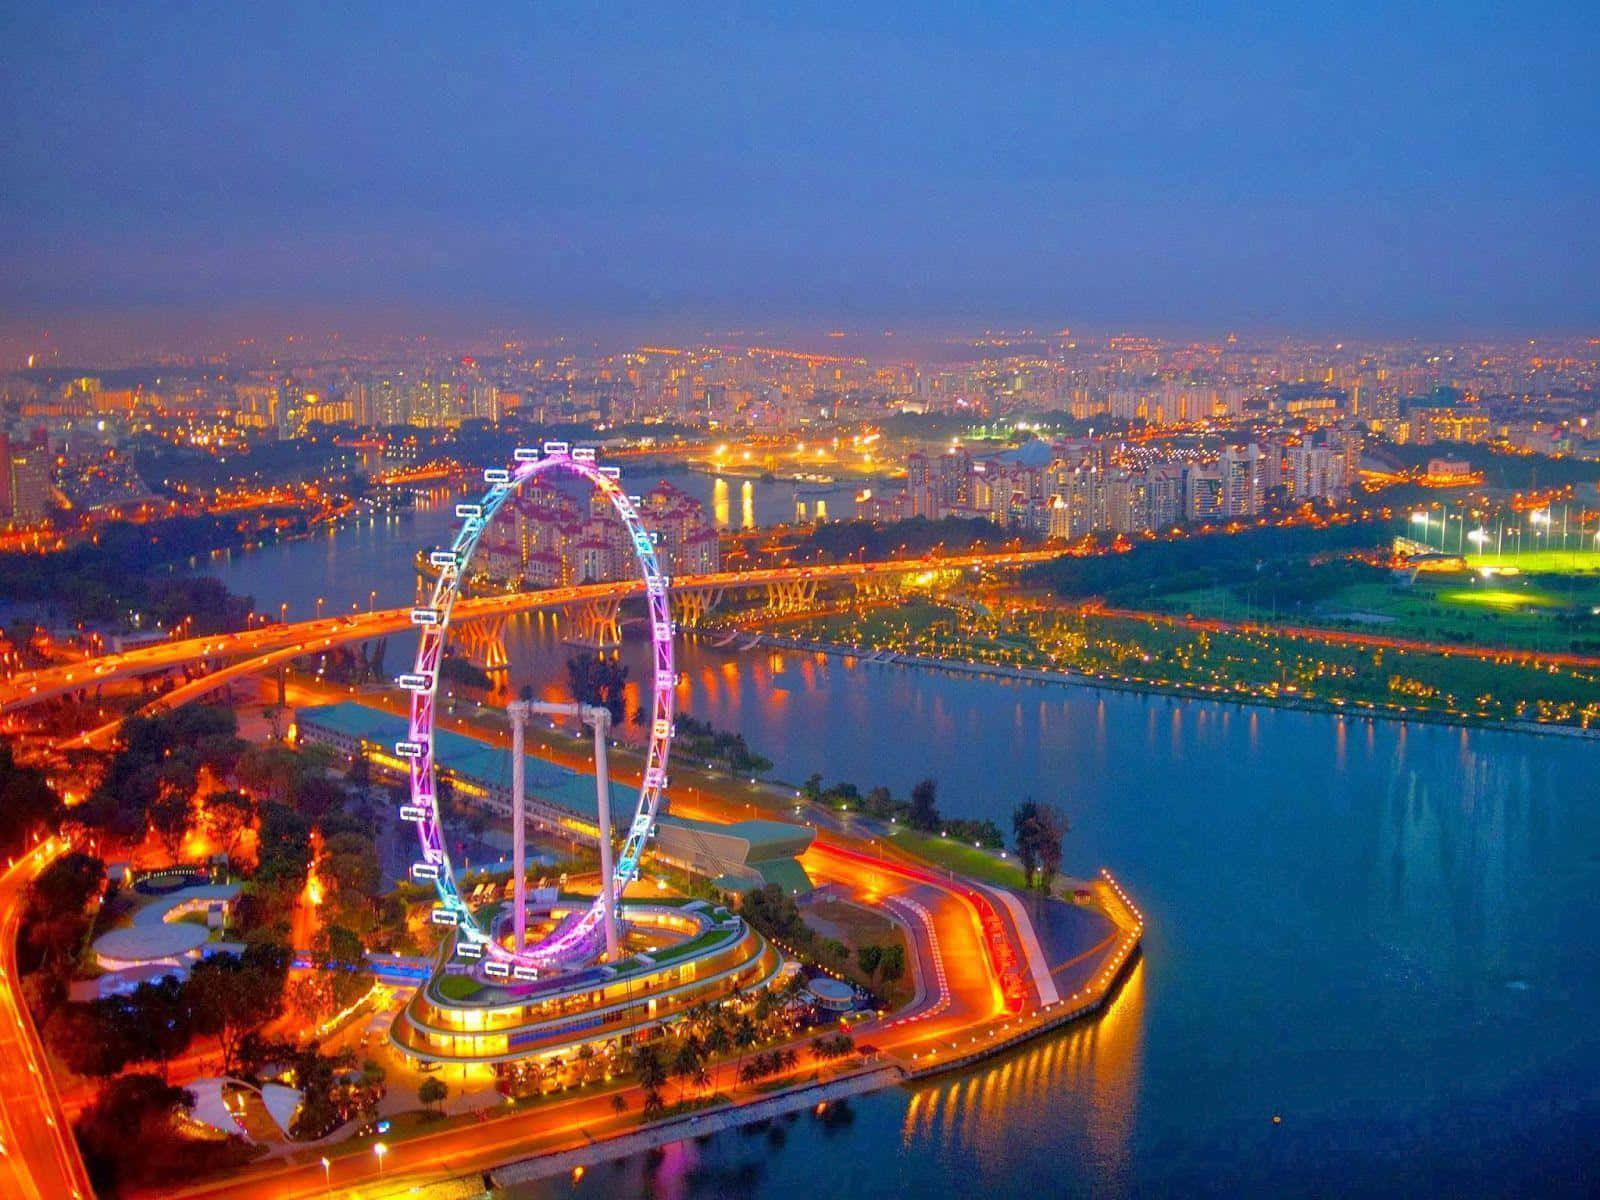 Beauty of Singapore